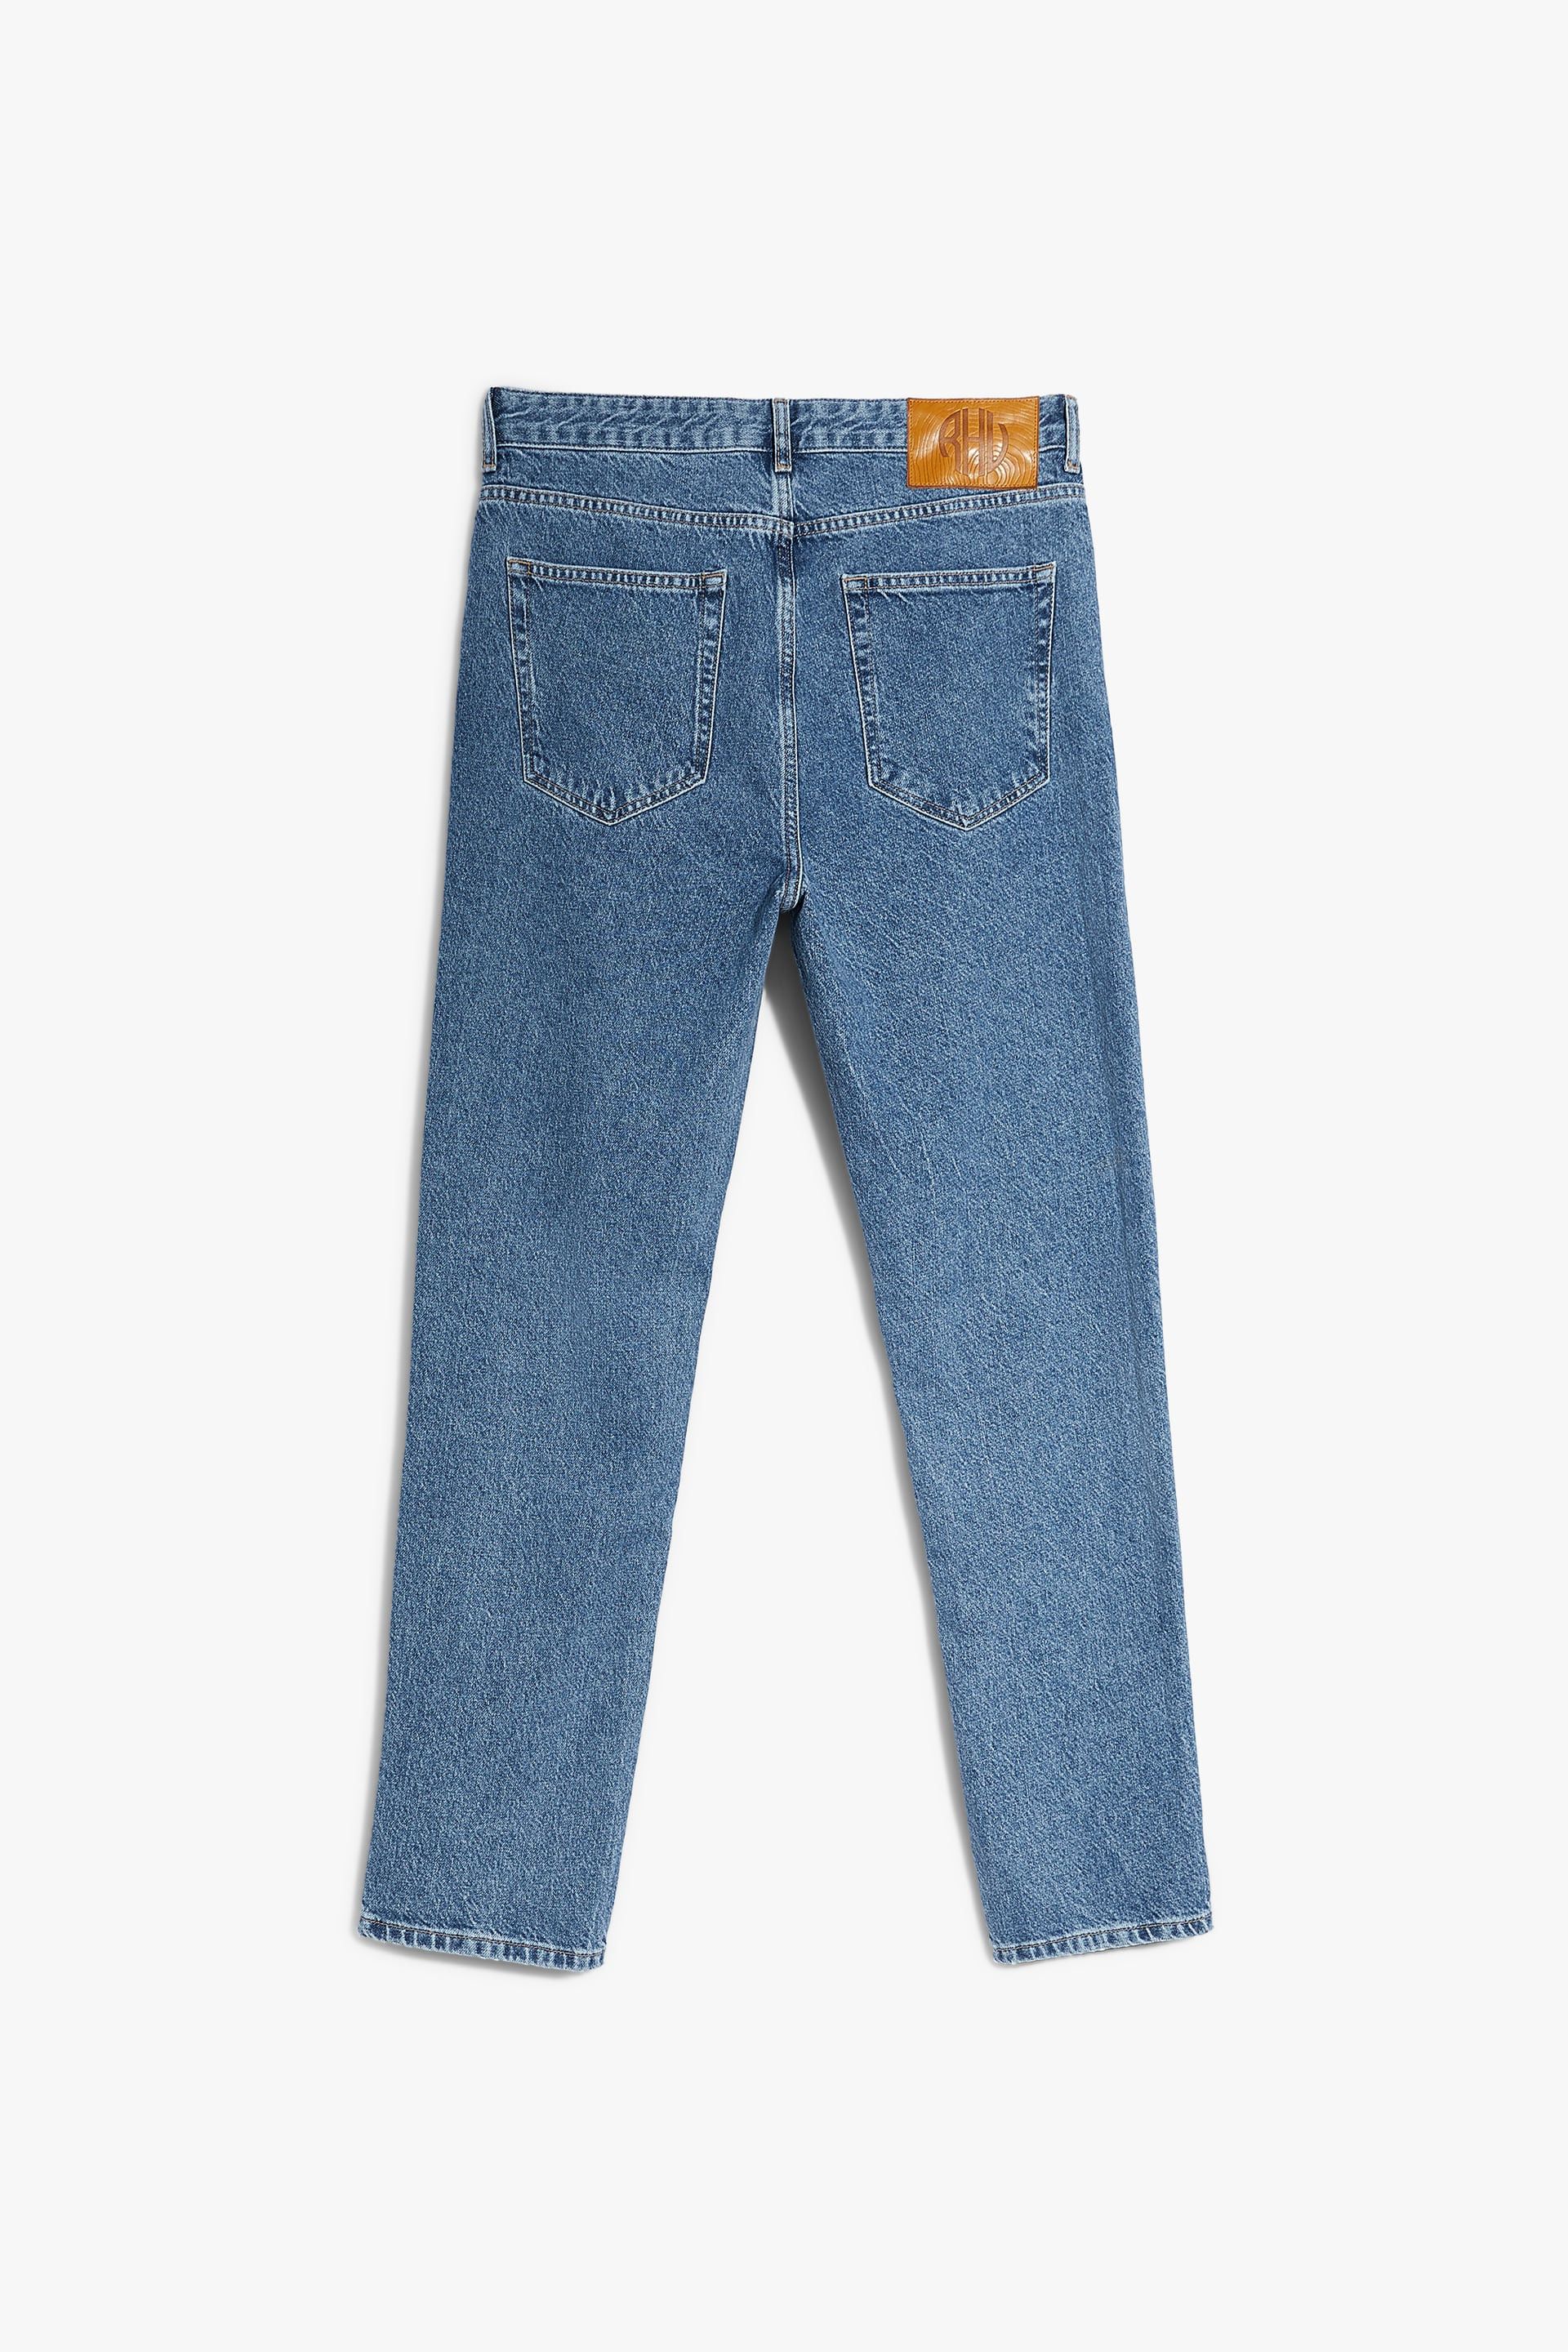 Zara Rhuigi x Zara Straight Navy Indigo Jeans Denim Size US 30 / EU 46 - 7 Thumbnail